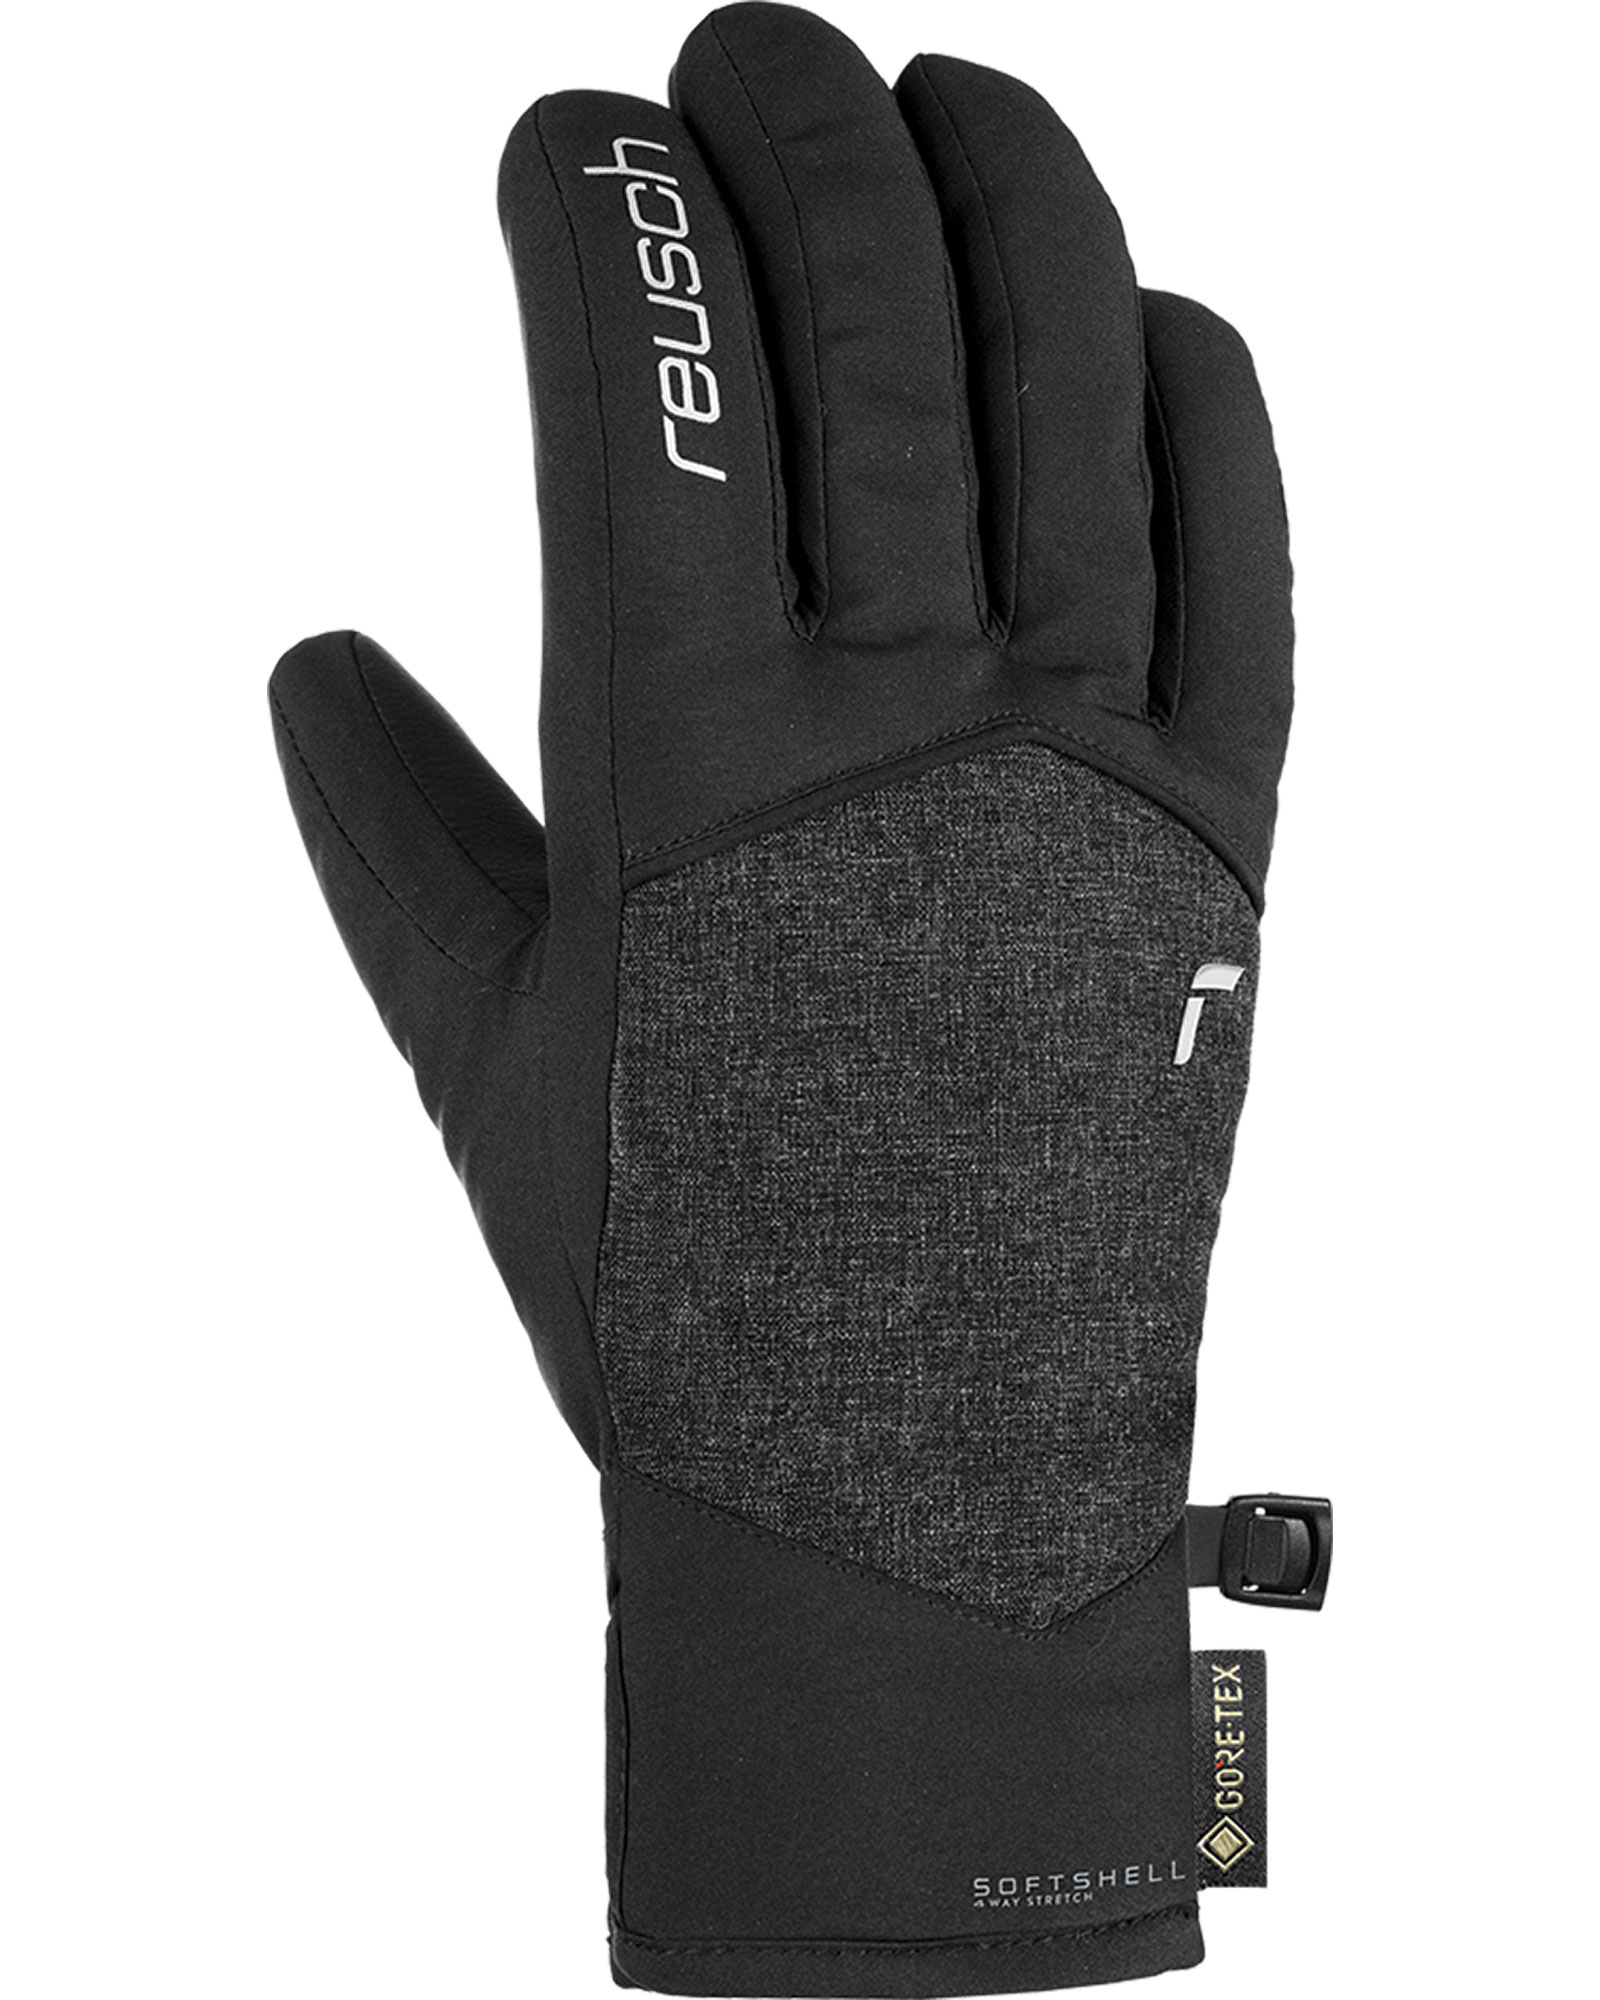 Reusch Mia Women’s Gloves - Black/Black Melange Size 6.5